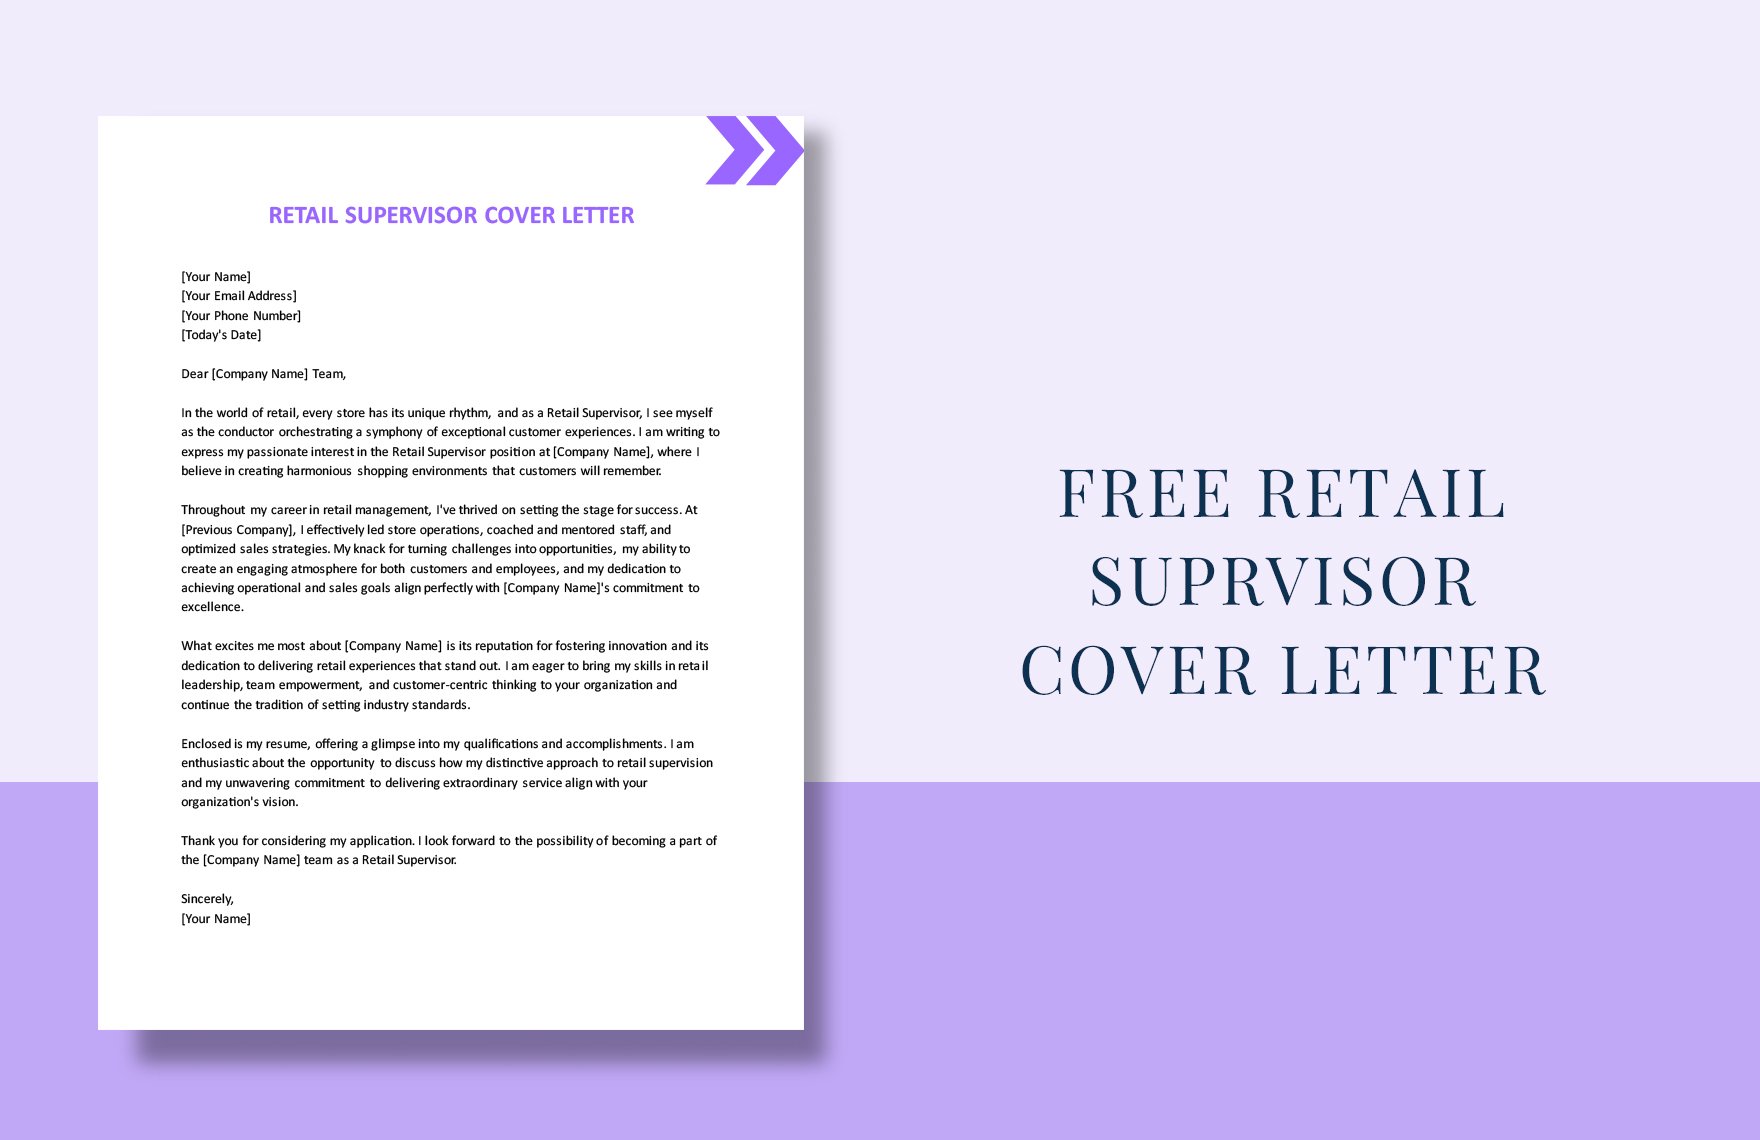 Retail Supervisor Cover Letter in Word, Google Docs, PDF